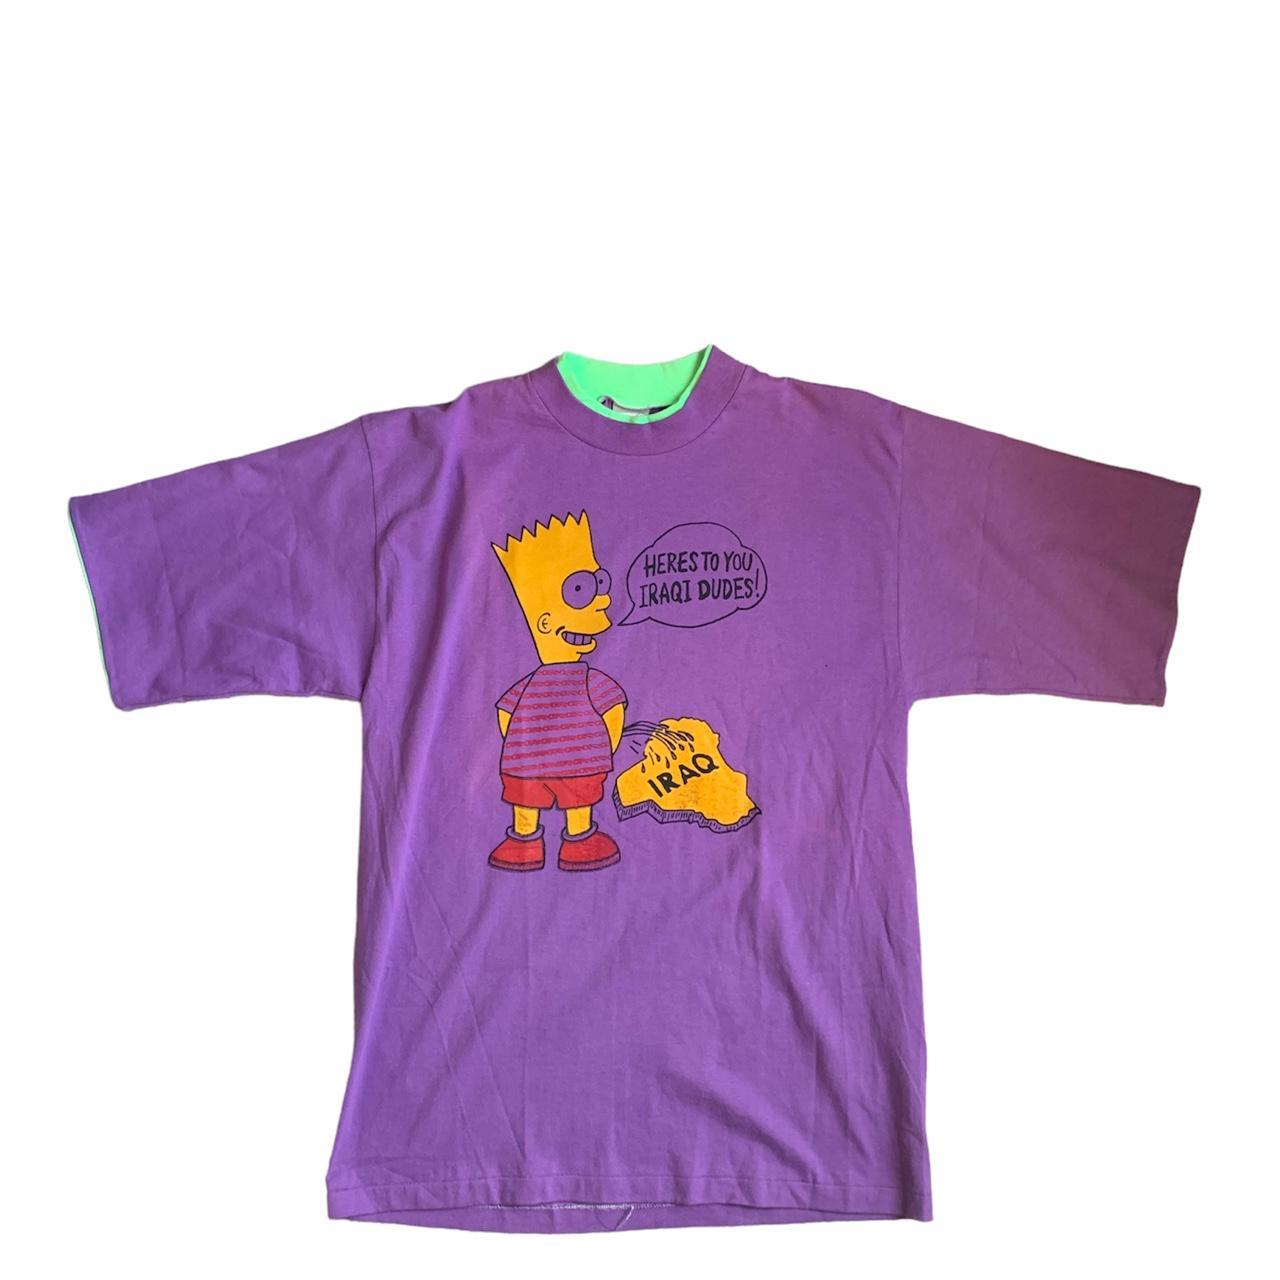 Ocean Pacific Men's Purple T-shirt